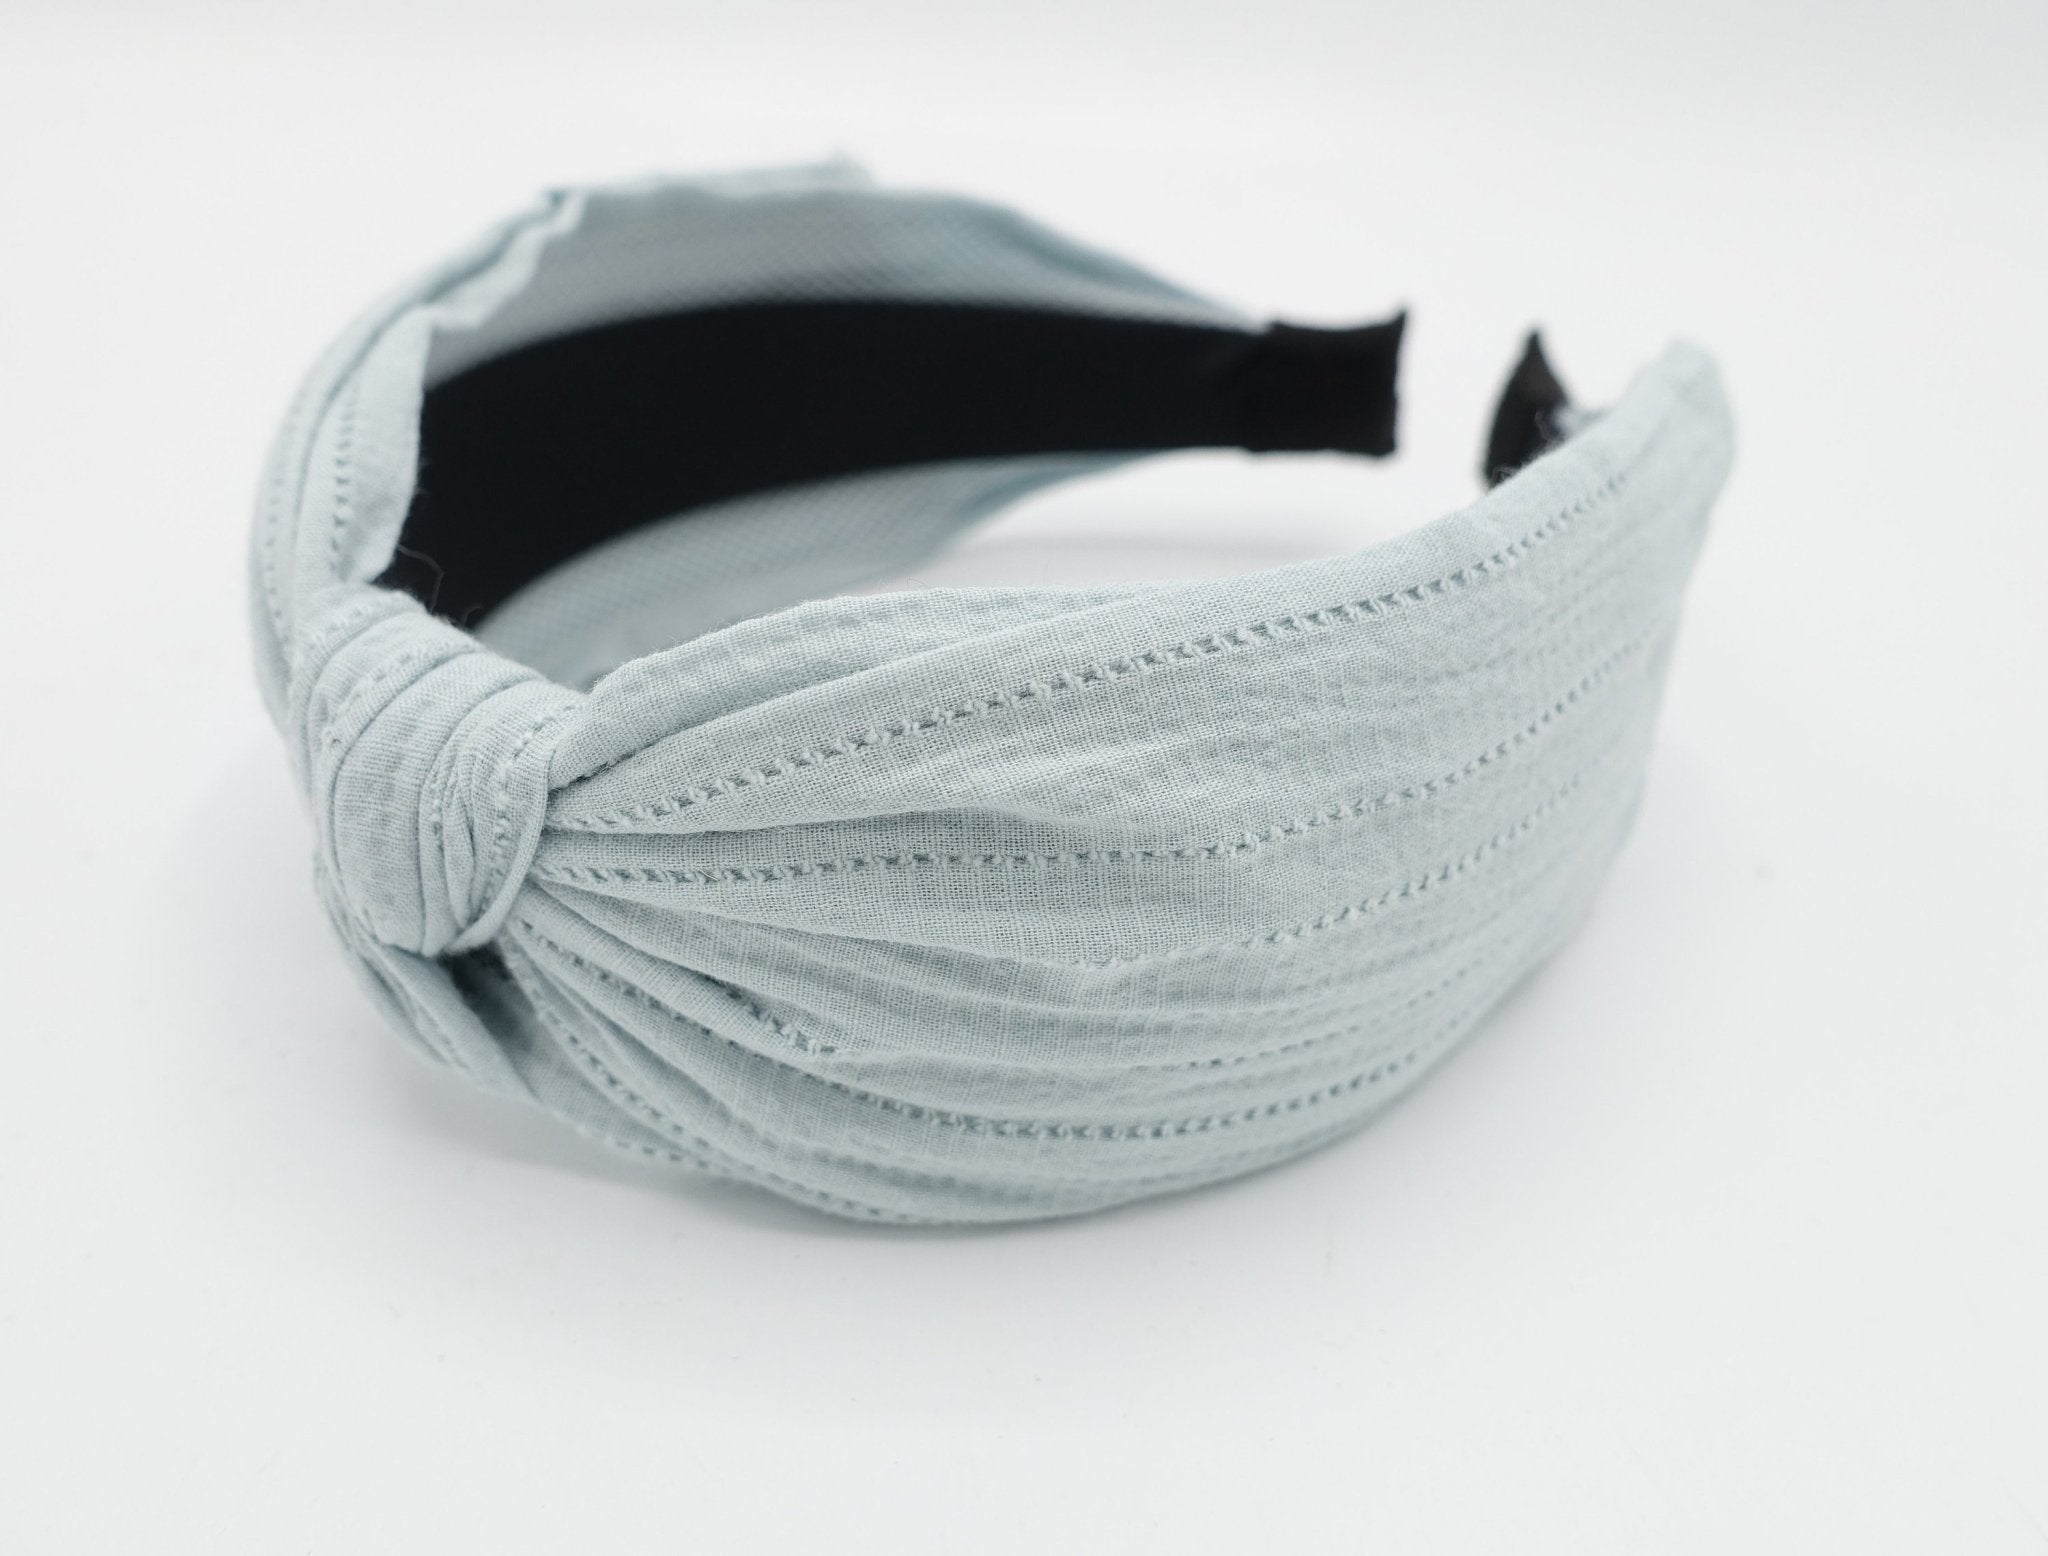 veryshine.com Accessories bow tie headband hairband for woman